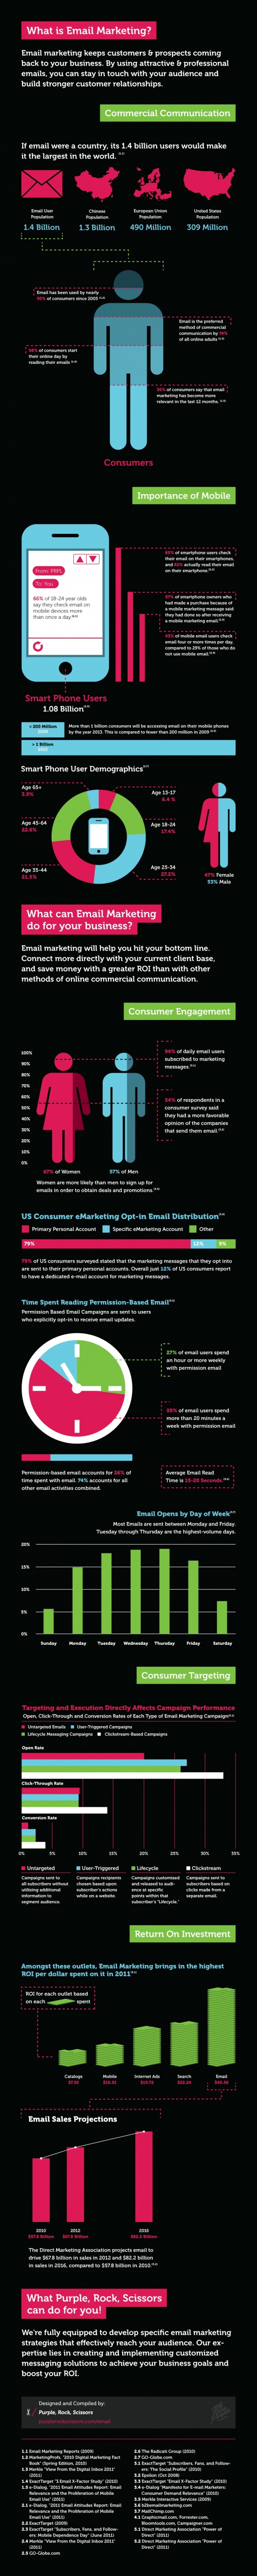 0718 e mail marketing infographic